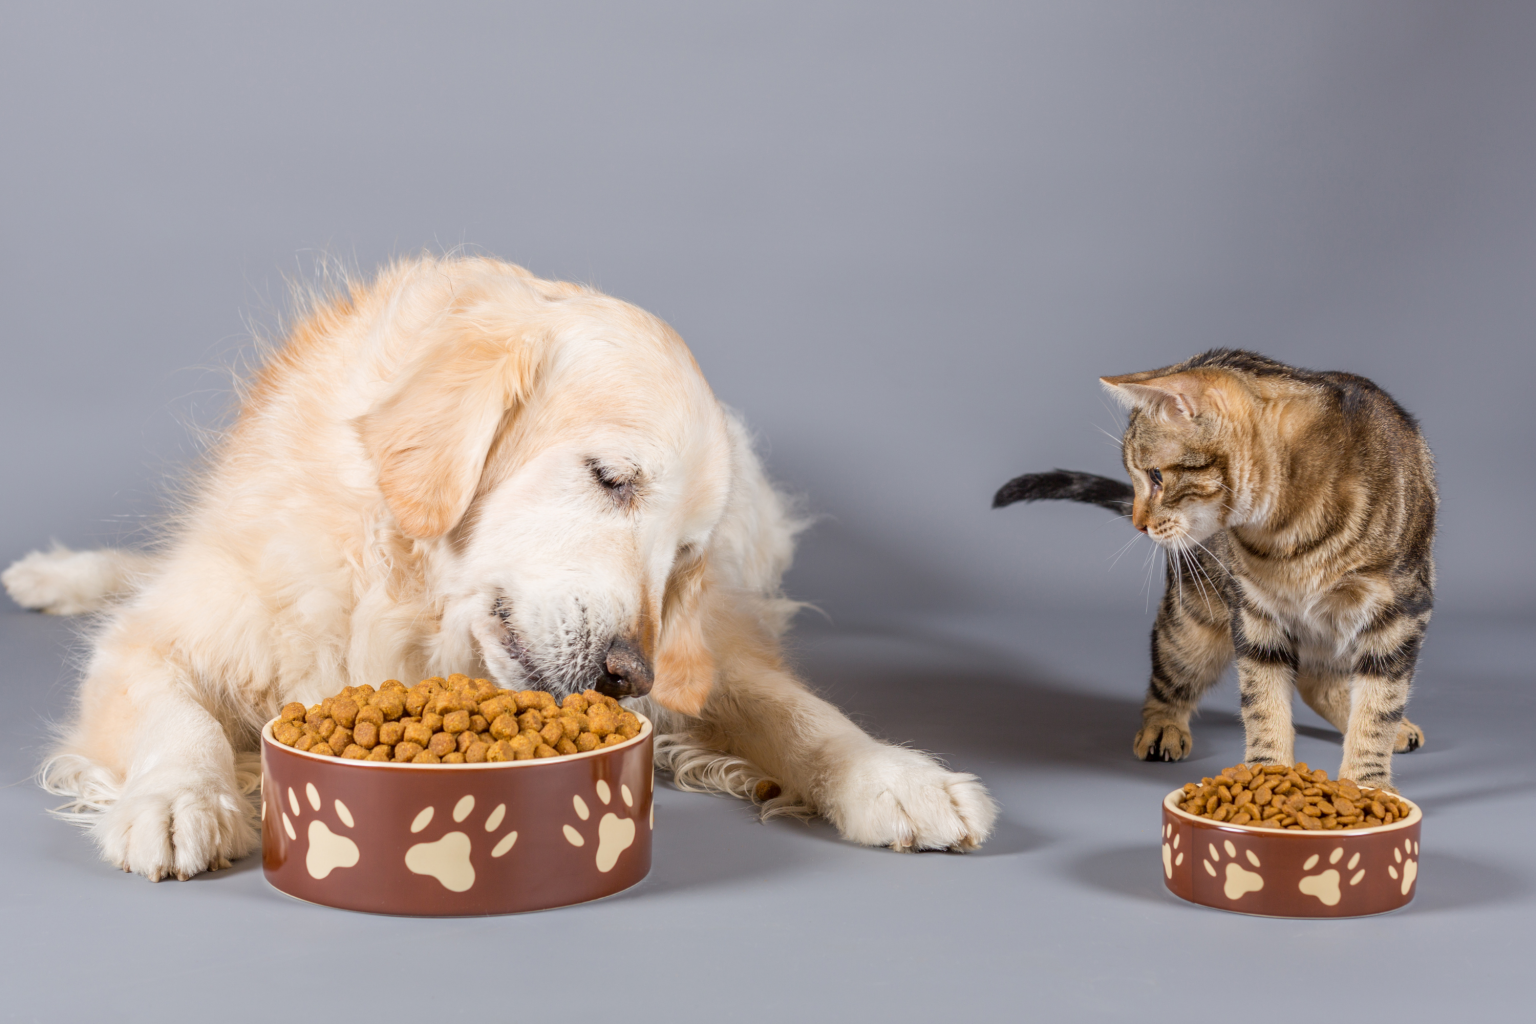 Cat in a dogs world. Корма для животных. Кошка и собака едят. Корма для кошек и собак. Корм для животных кошек собак.